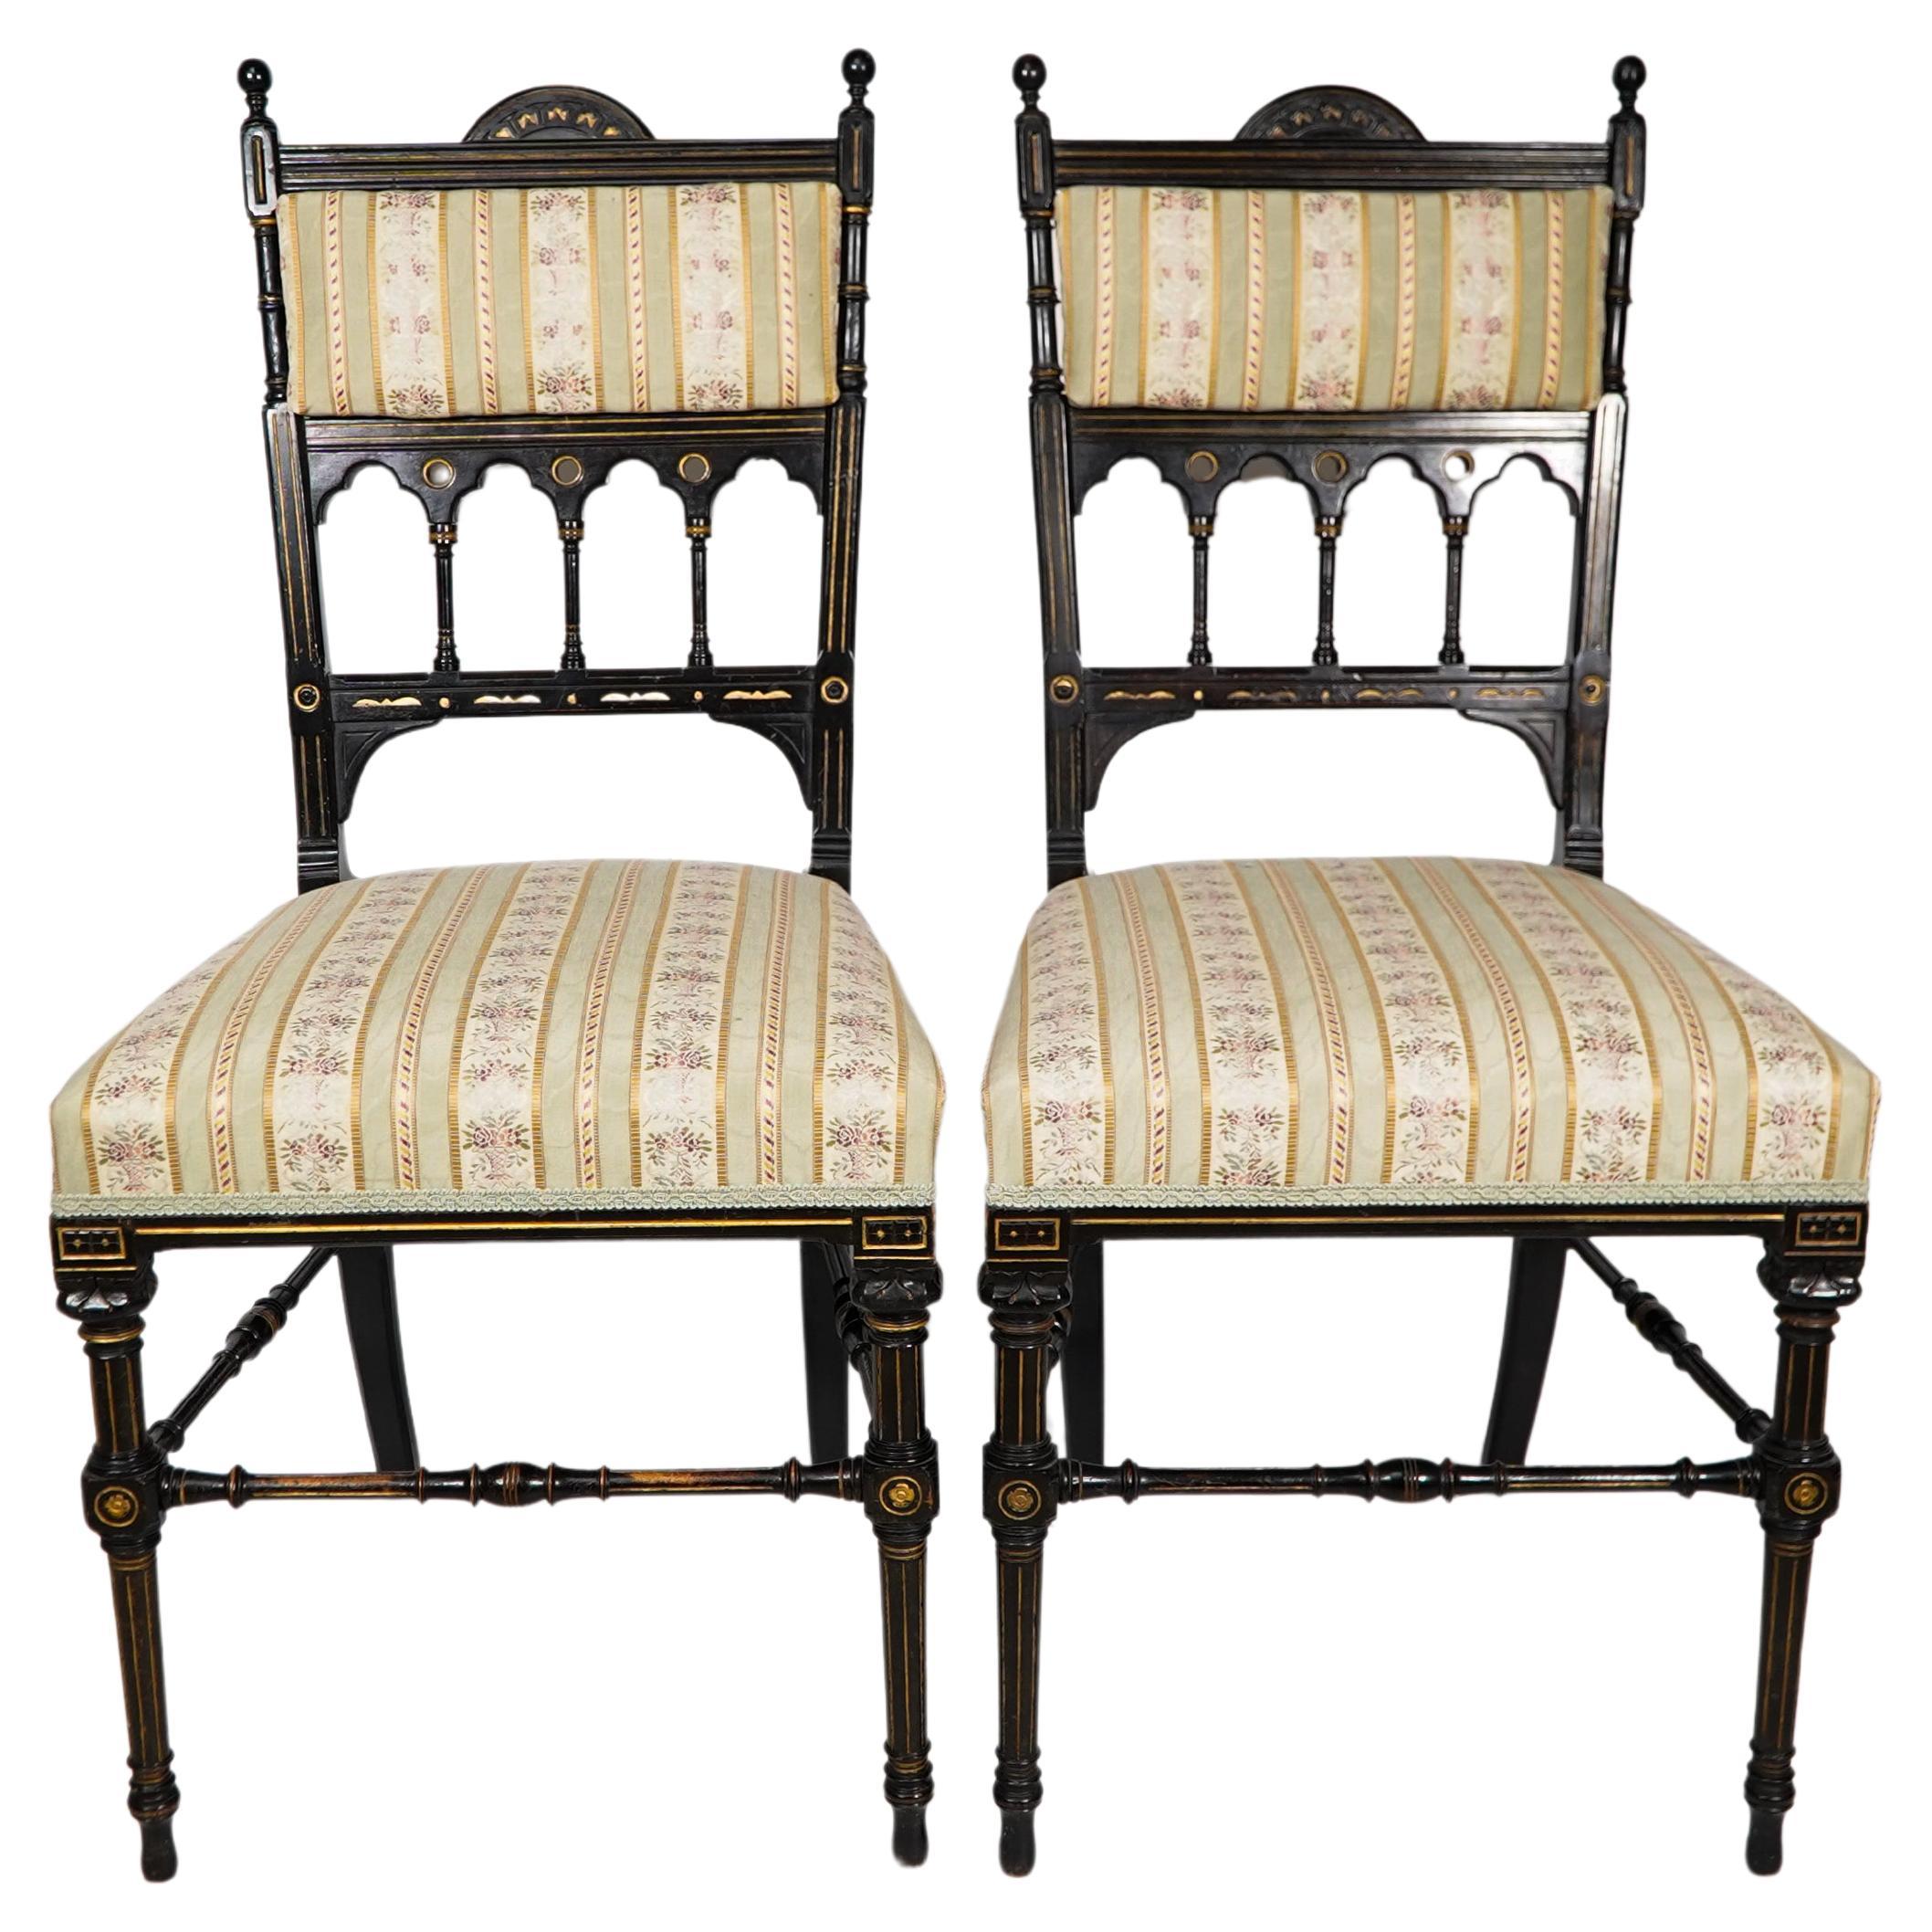 Whytock & Reid of Edinburgh. A rare pair of high Aesthetic Movement ebonized and parcel gilt side chairs. 
